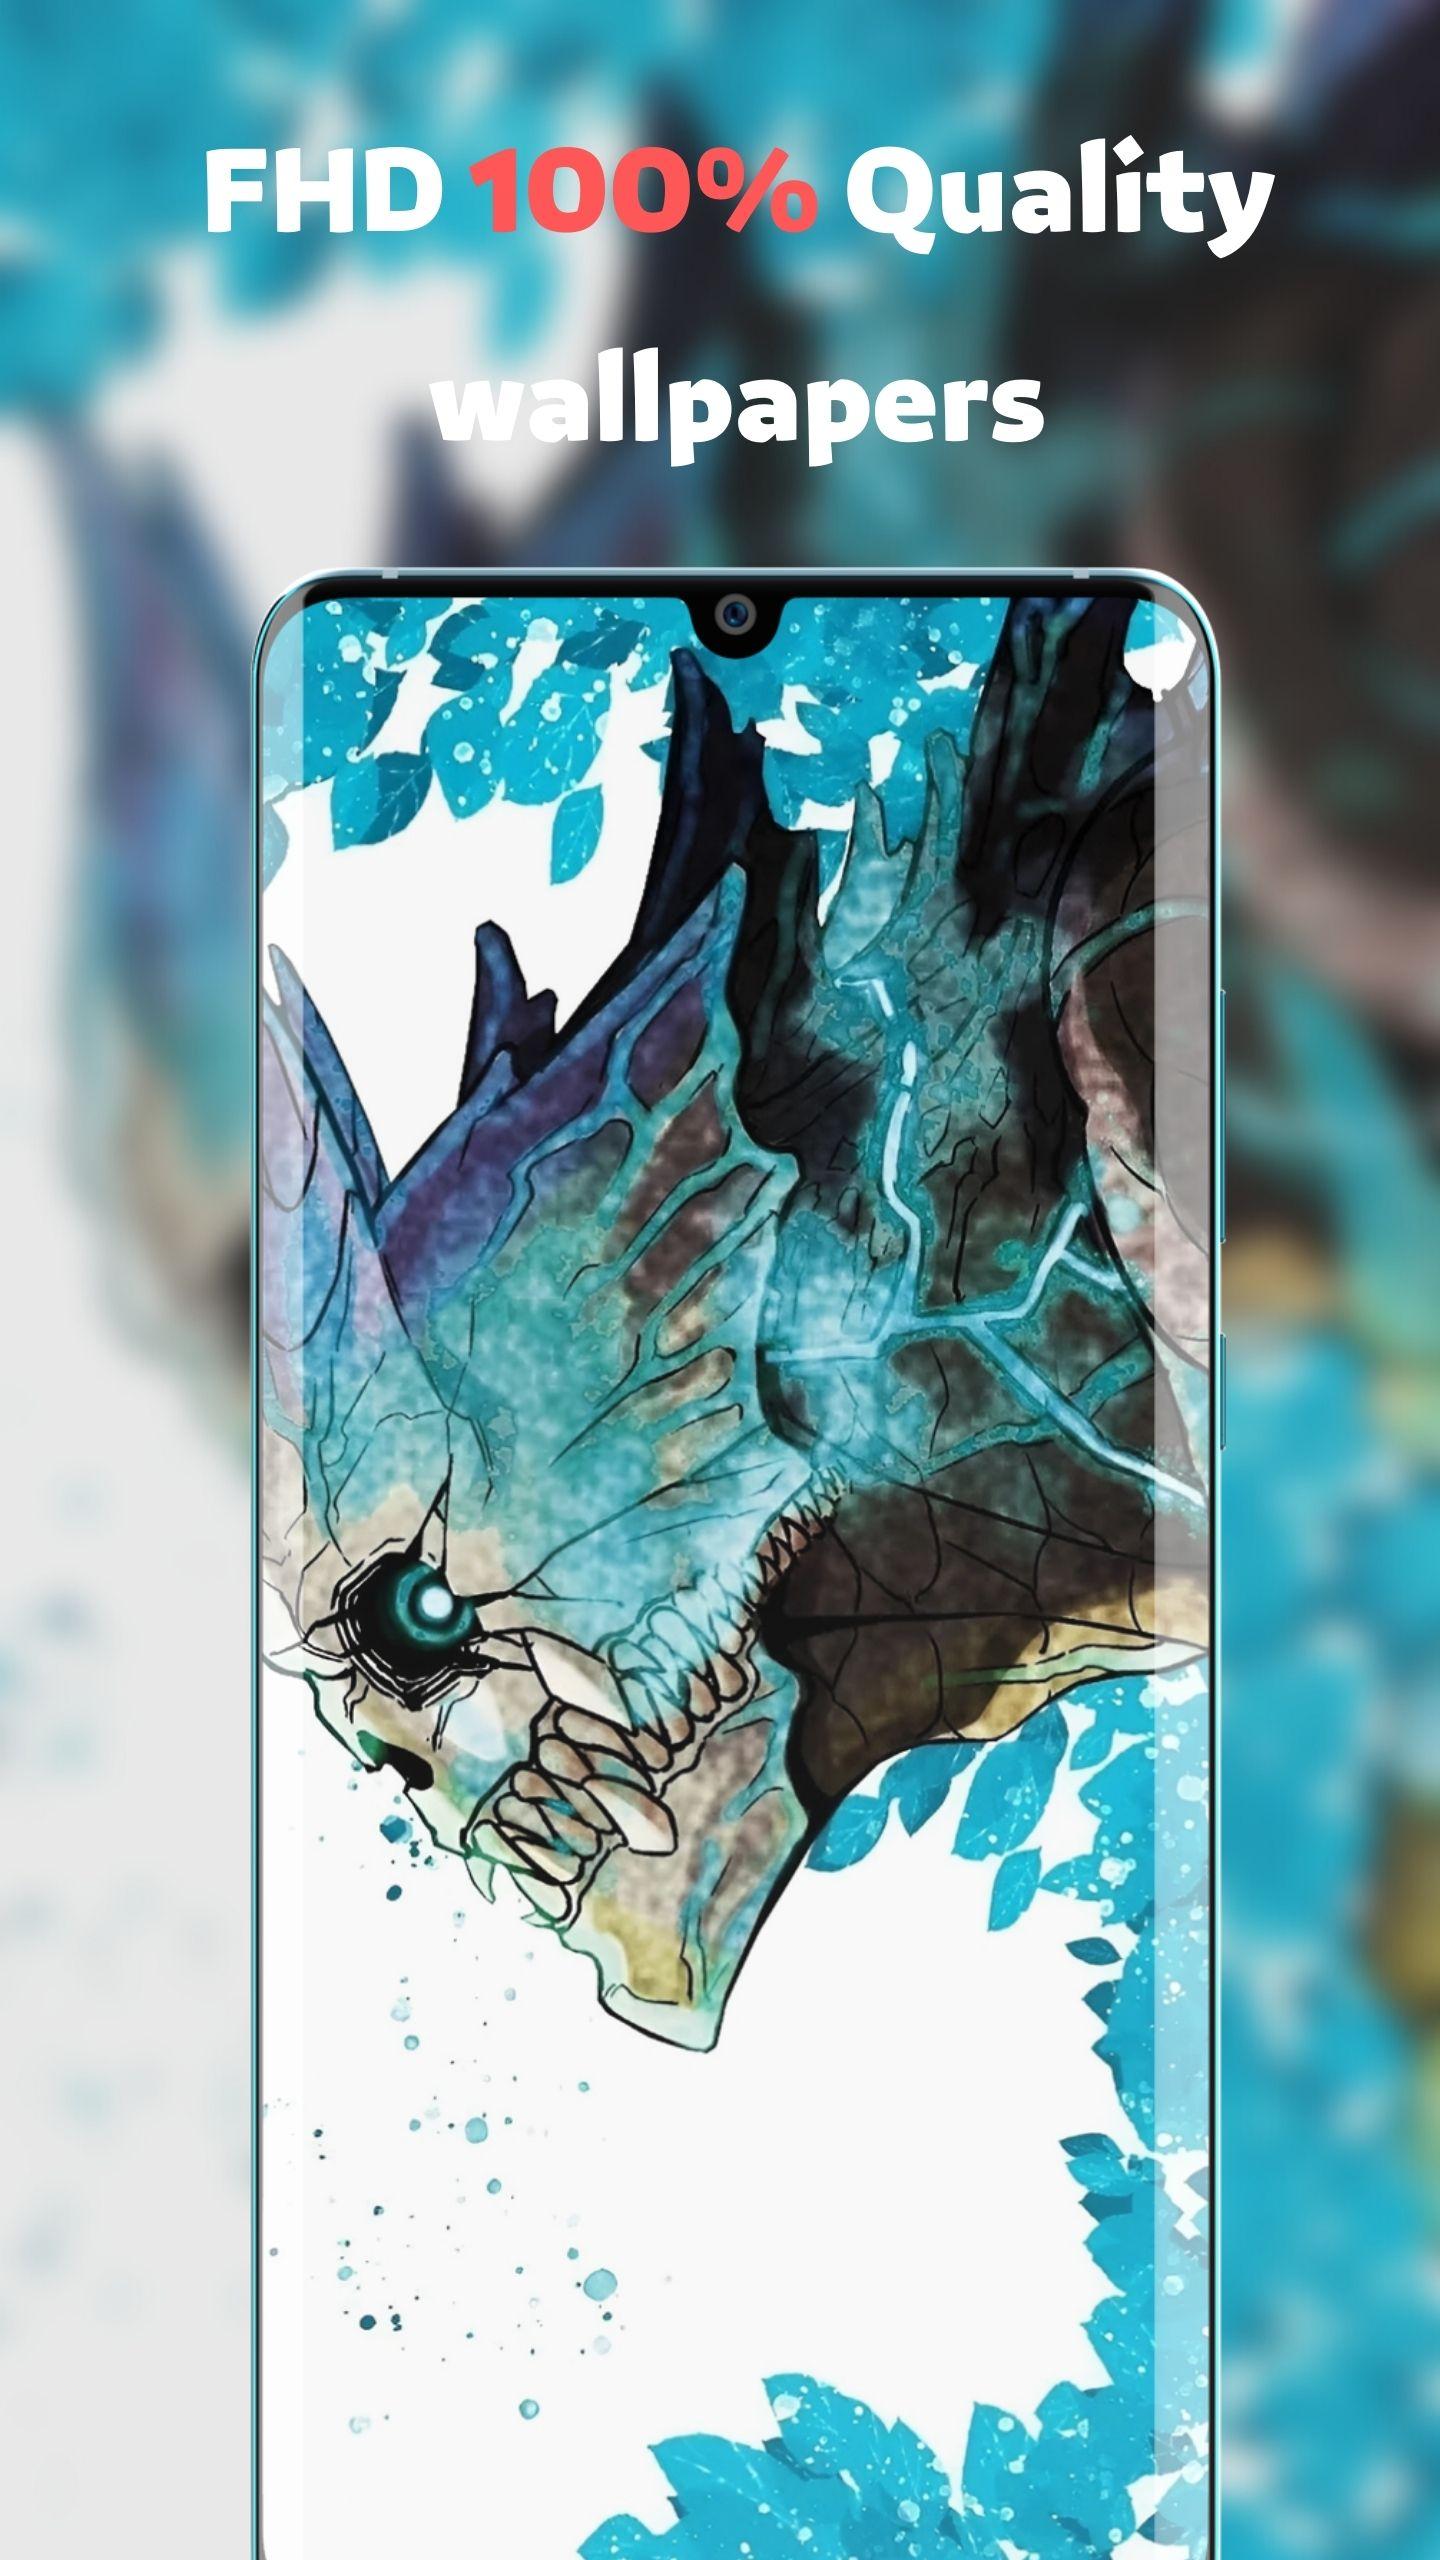 Kaiju no wallpaper apk for android download